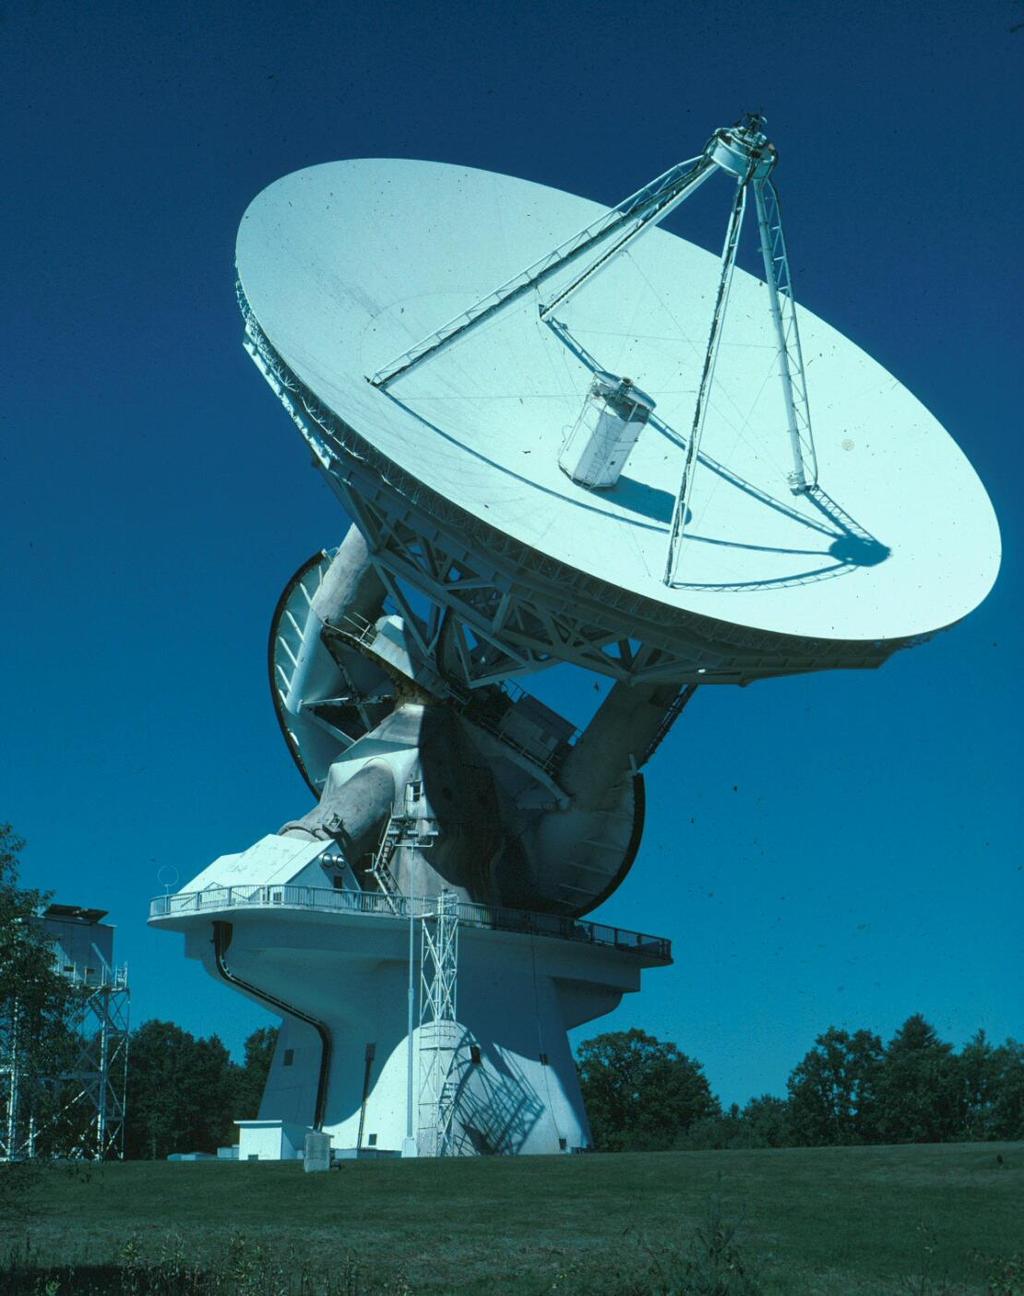 Radio Telescope receiver parabolic reflector